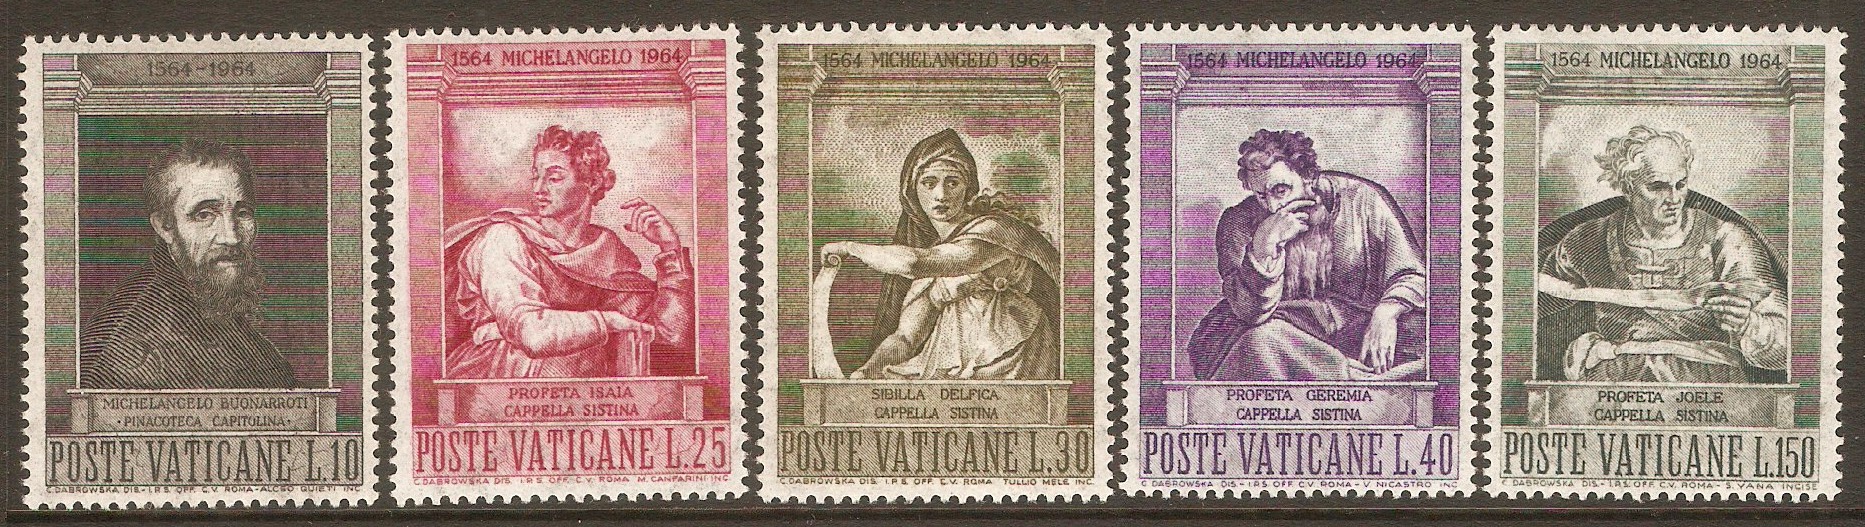 Vatican City 1964 Michelangelo set. SG431-SG435.